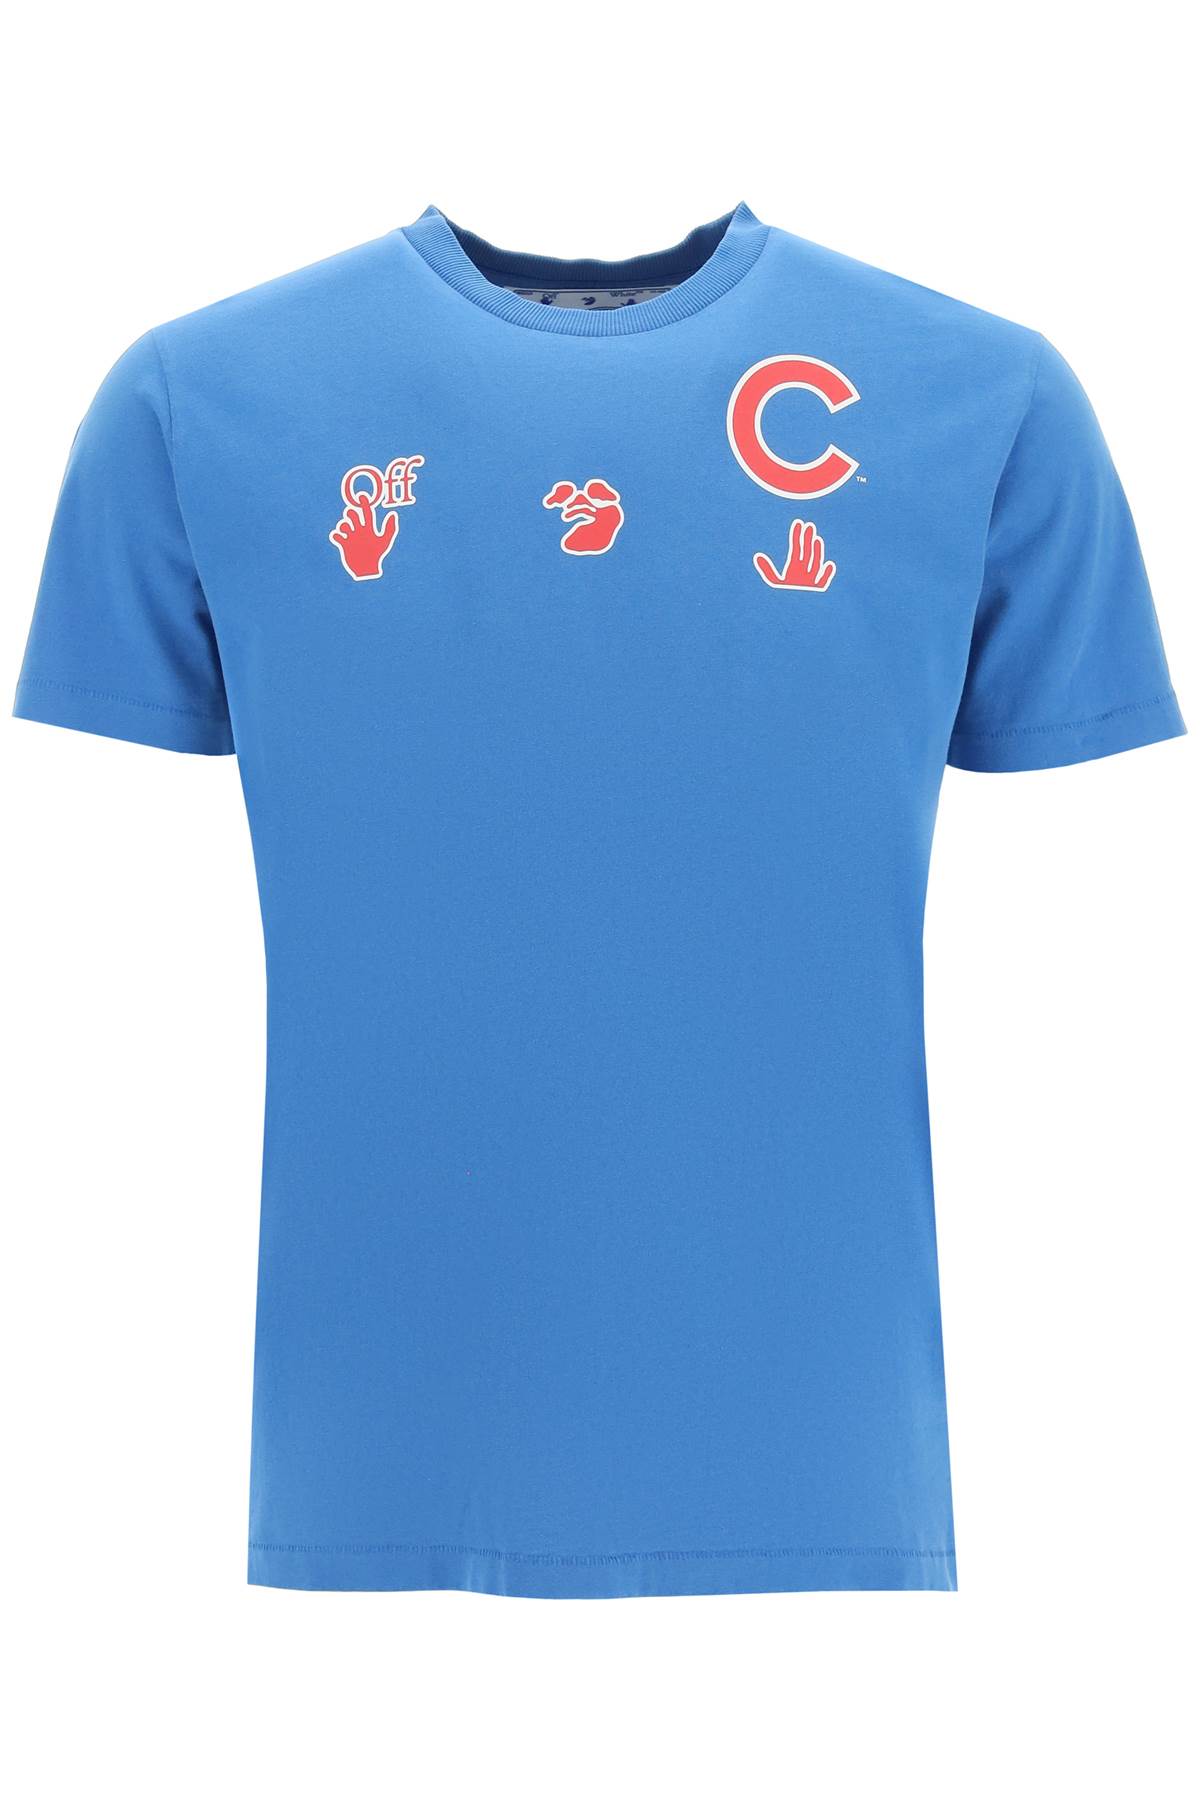 Off-White Chicago Cubs T-shirt X Mlb